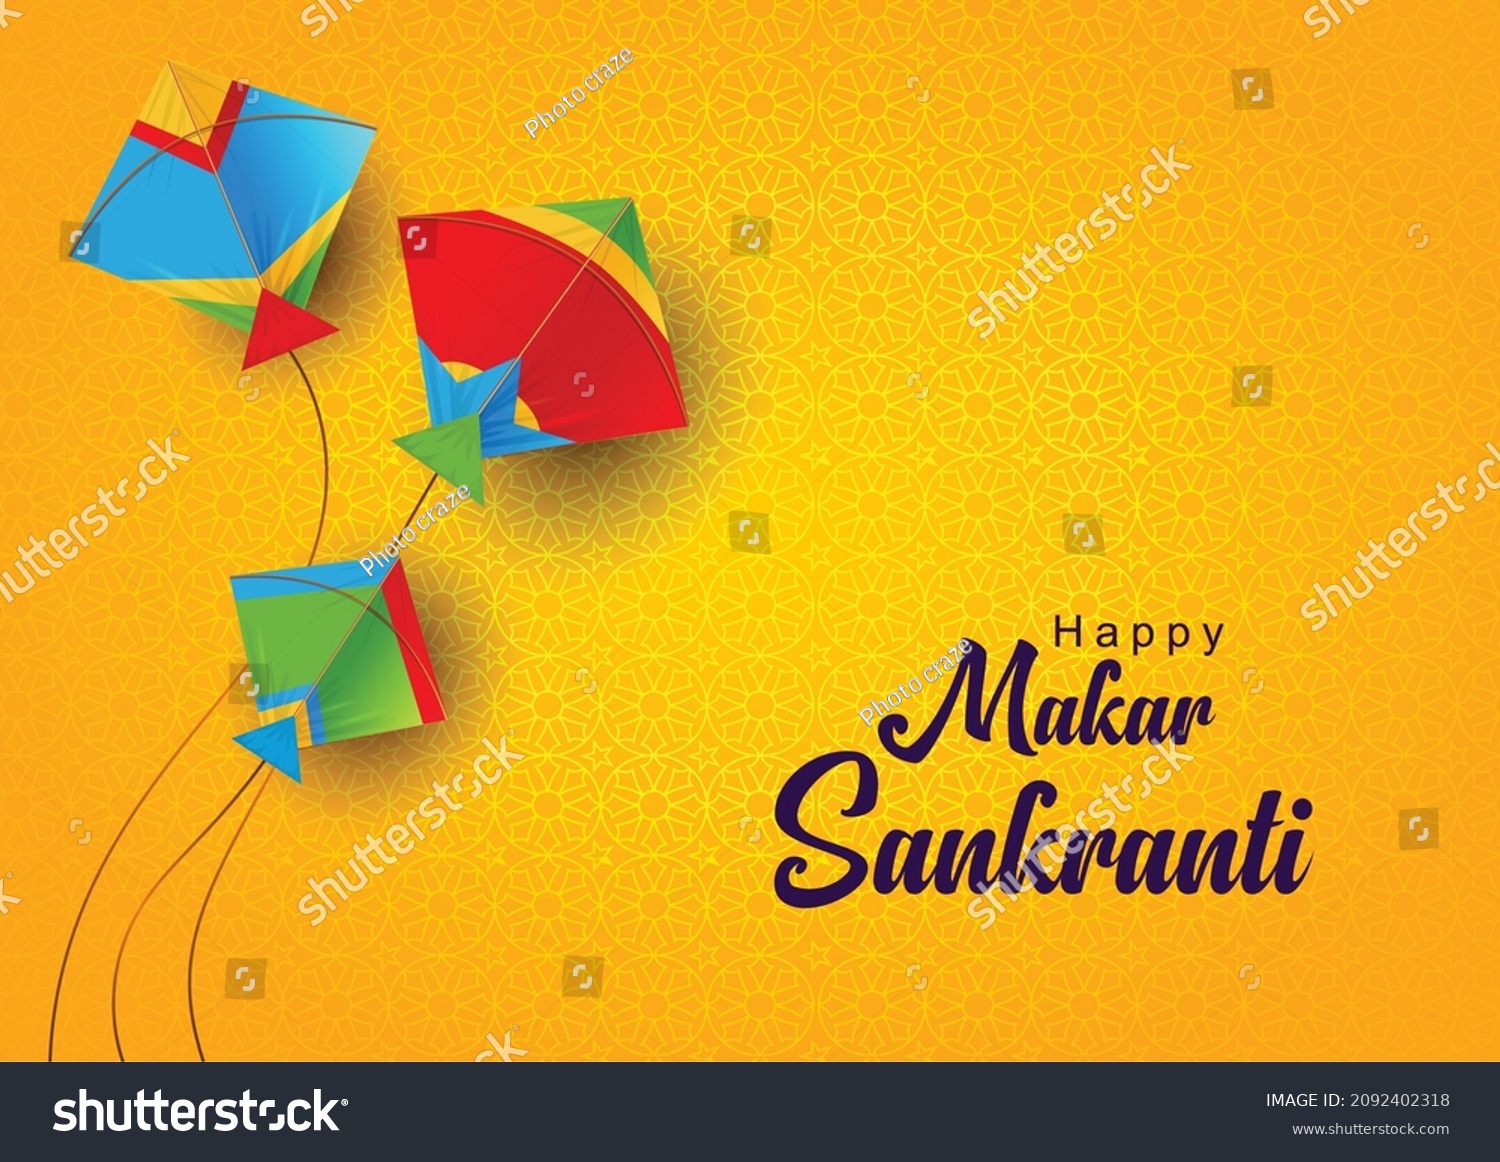 SVG of Indian festival Happy Makar Sankranti poster design with group of colorful kites flying. vector illustration design. svg